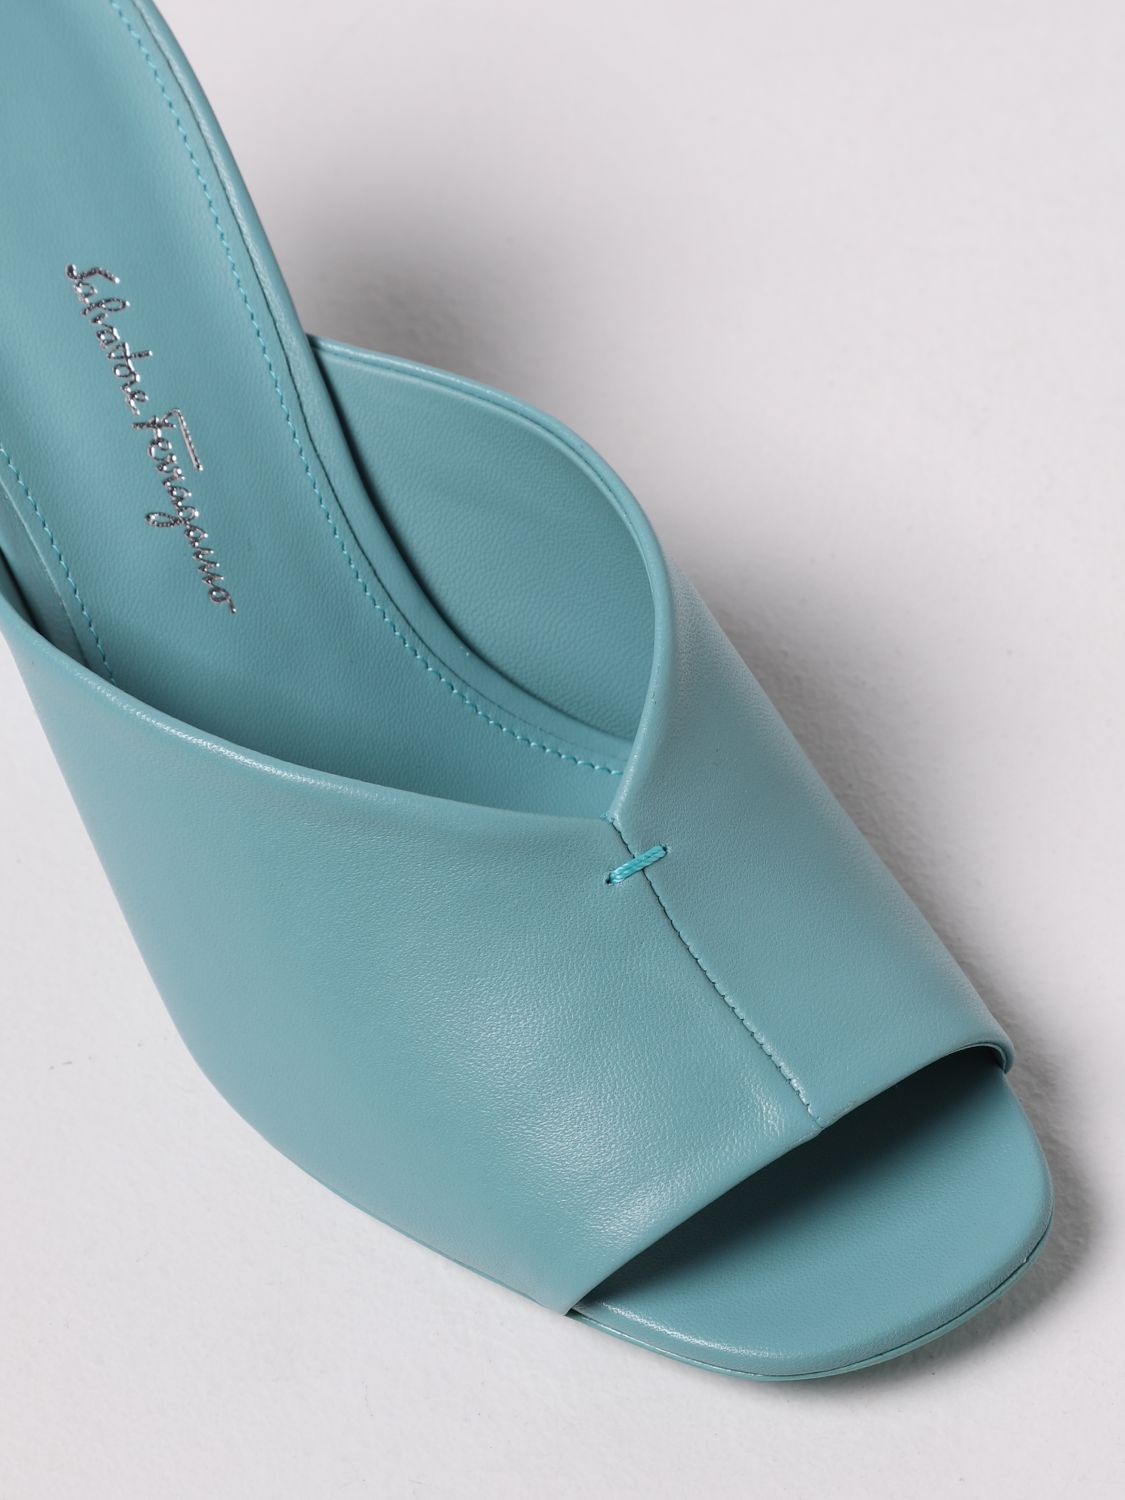 Sandales à talons Salvatore Ferragamo: Chaussures femme Salvatore Ferragamo turquoise 4